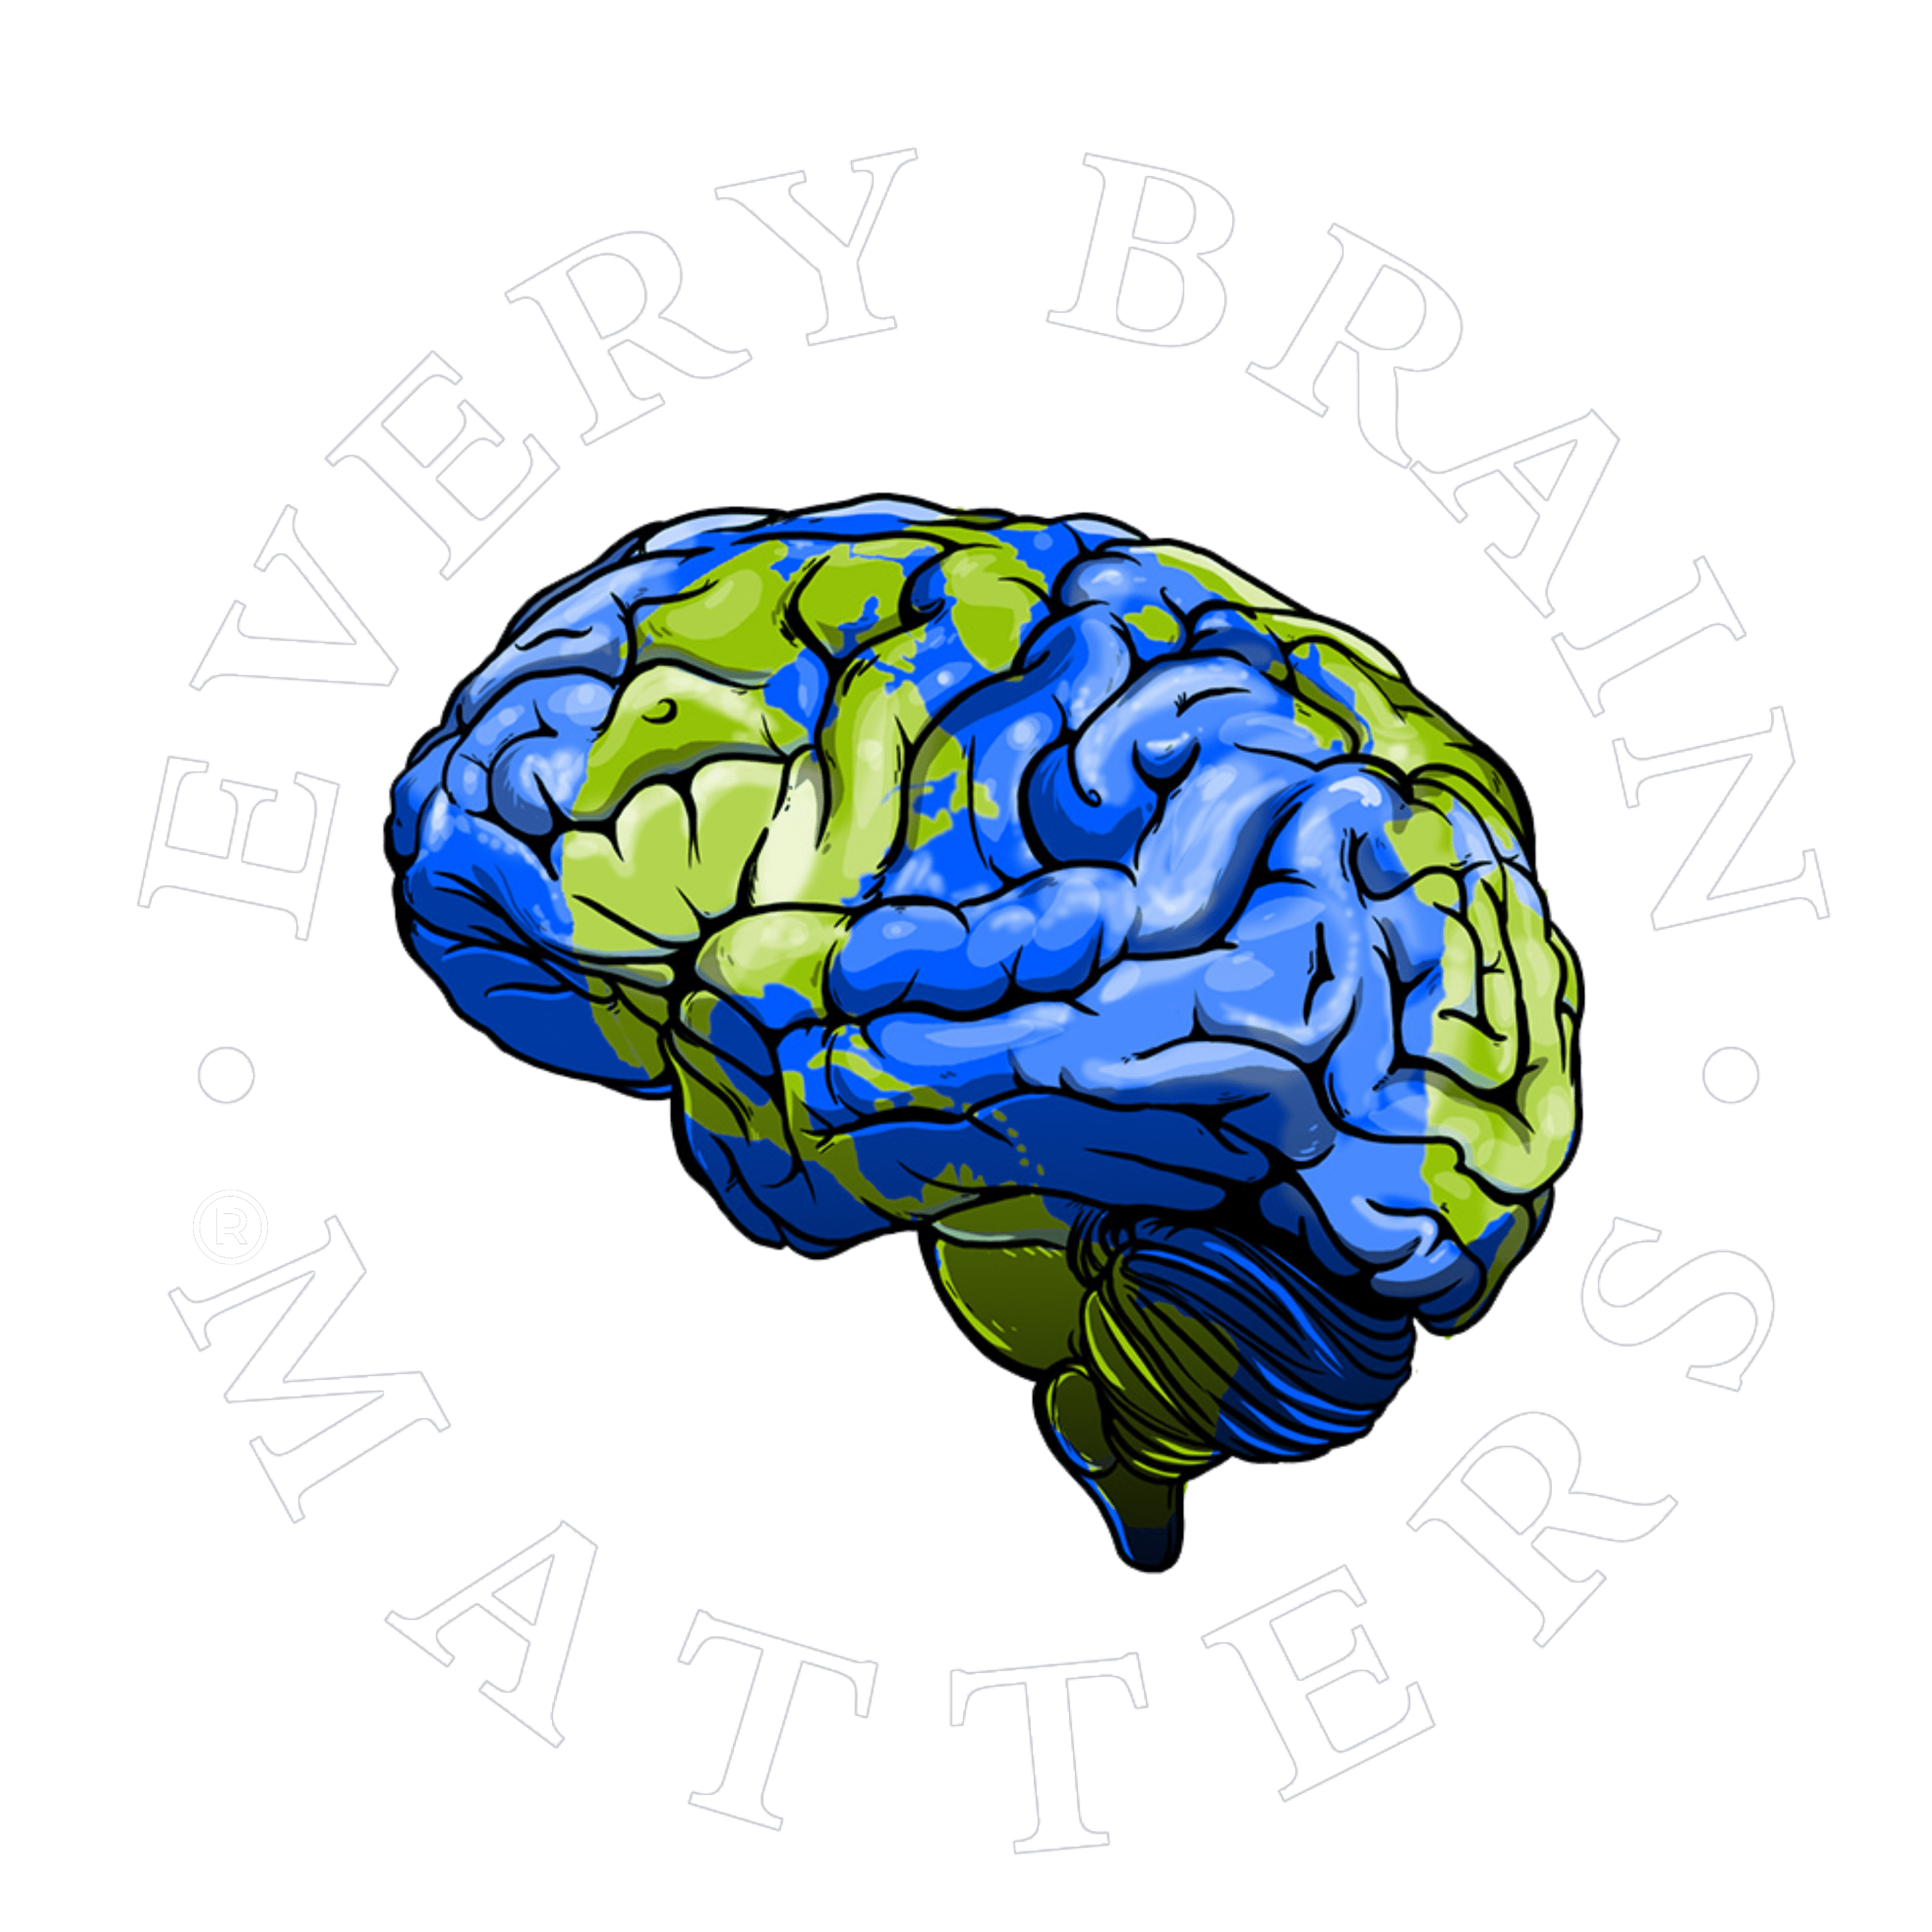 every brain matters